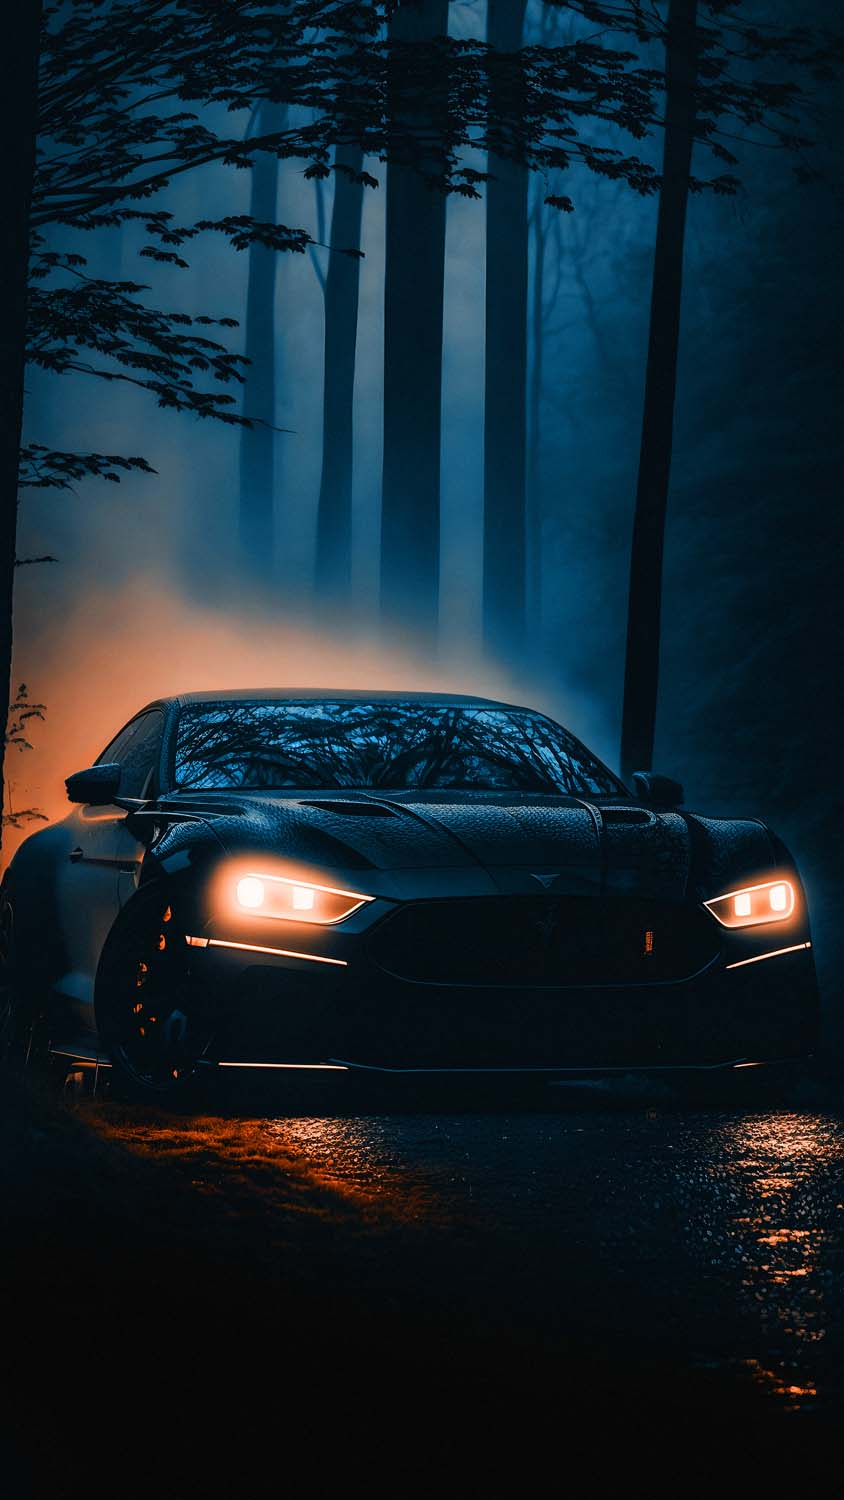 All Black Car At Night